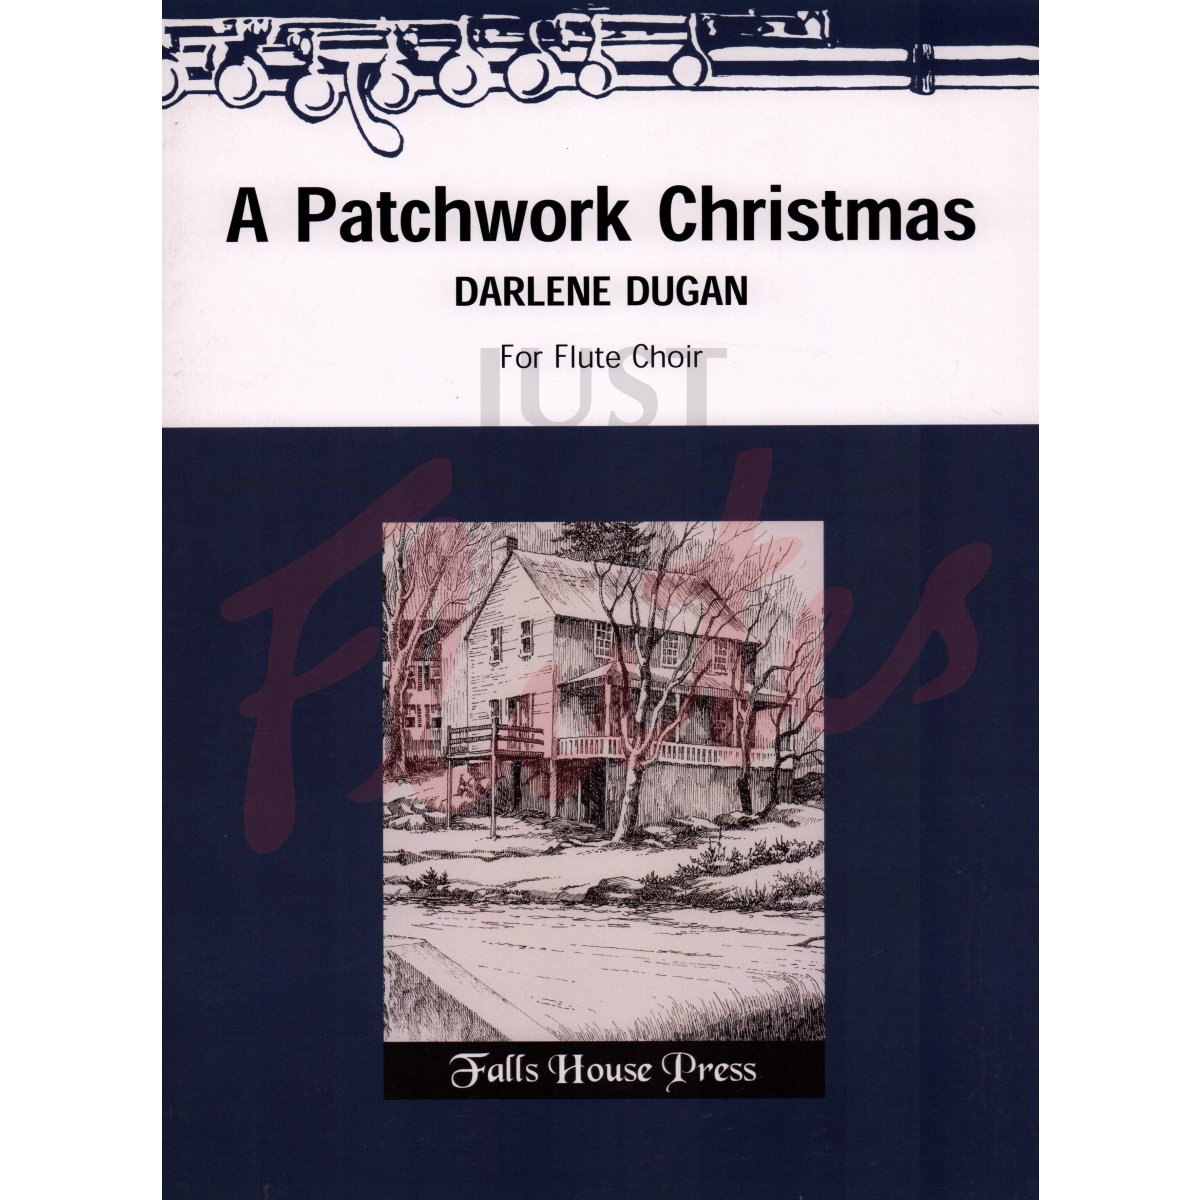 A Patchwork Christmas for Flute Choir